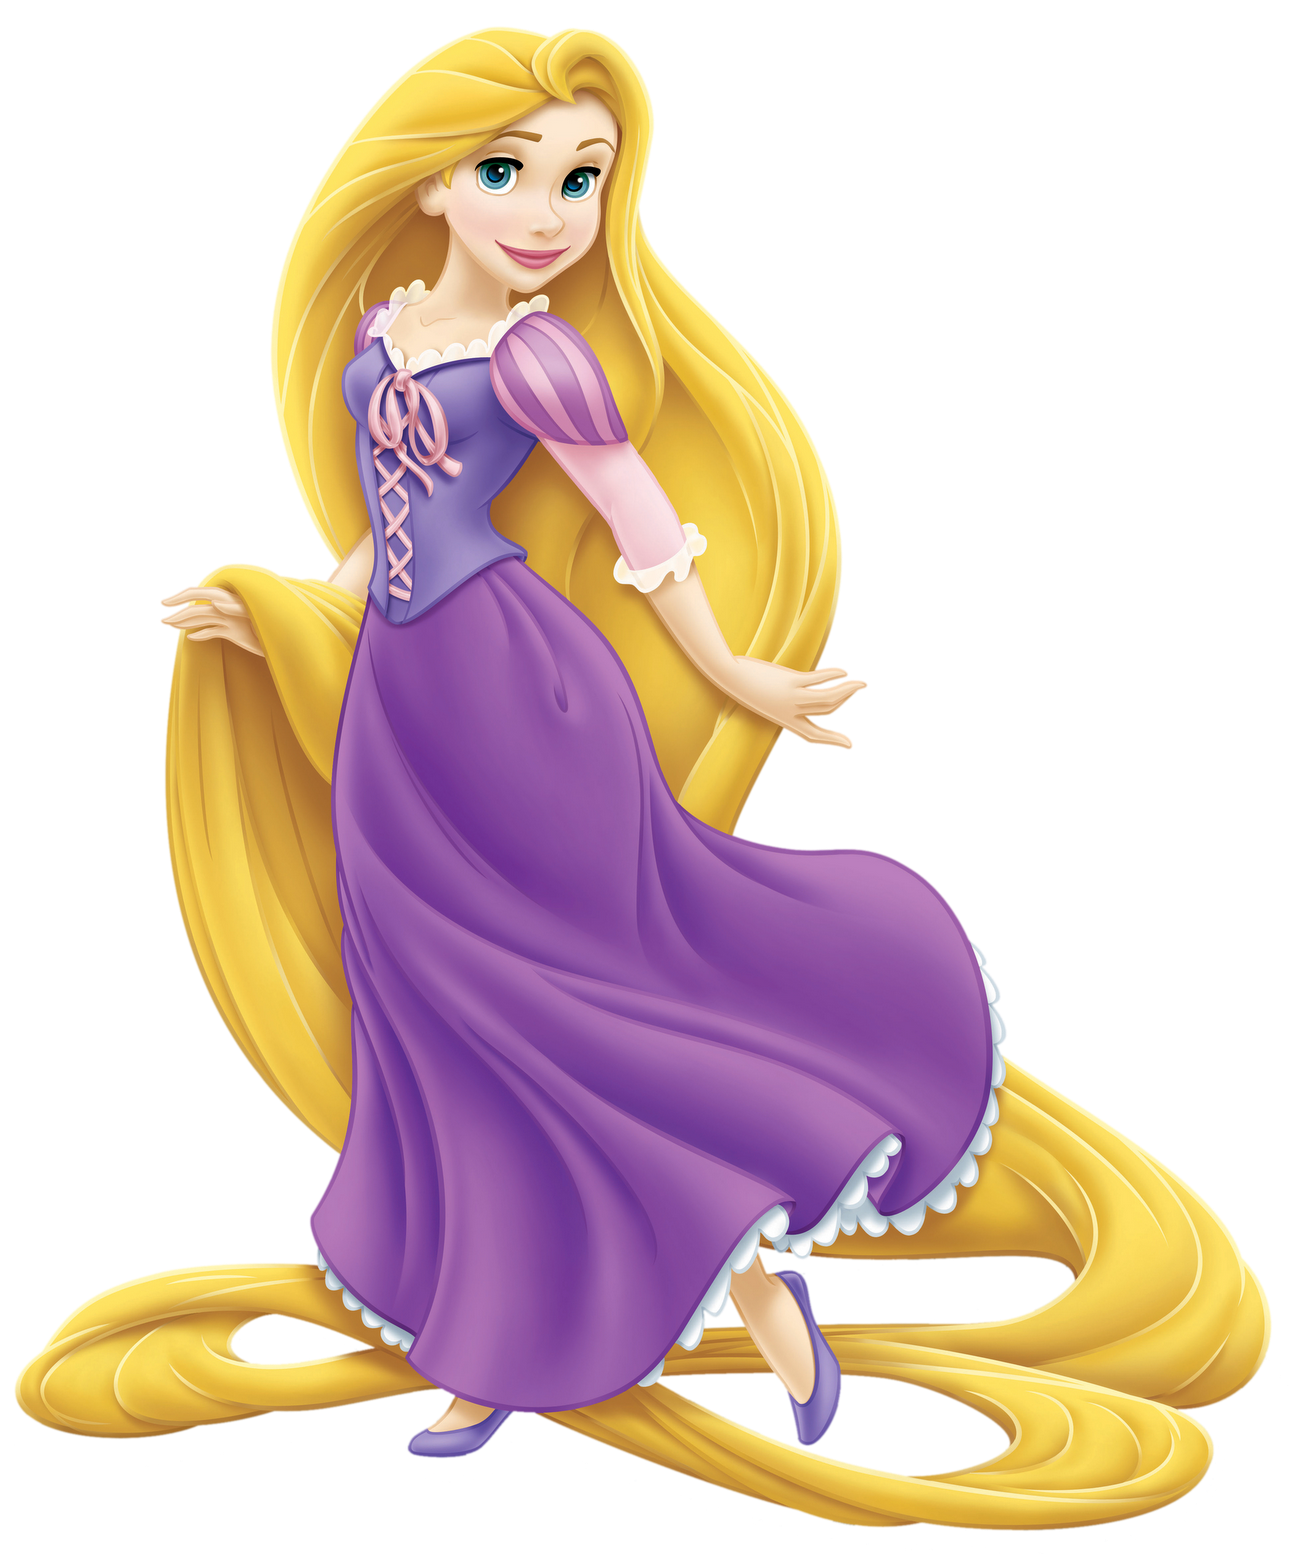 Rapunzel (Disney), Heroes and Villains Wiki